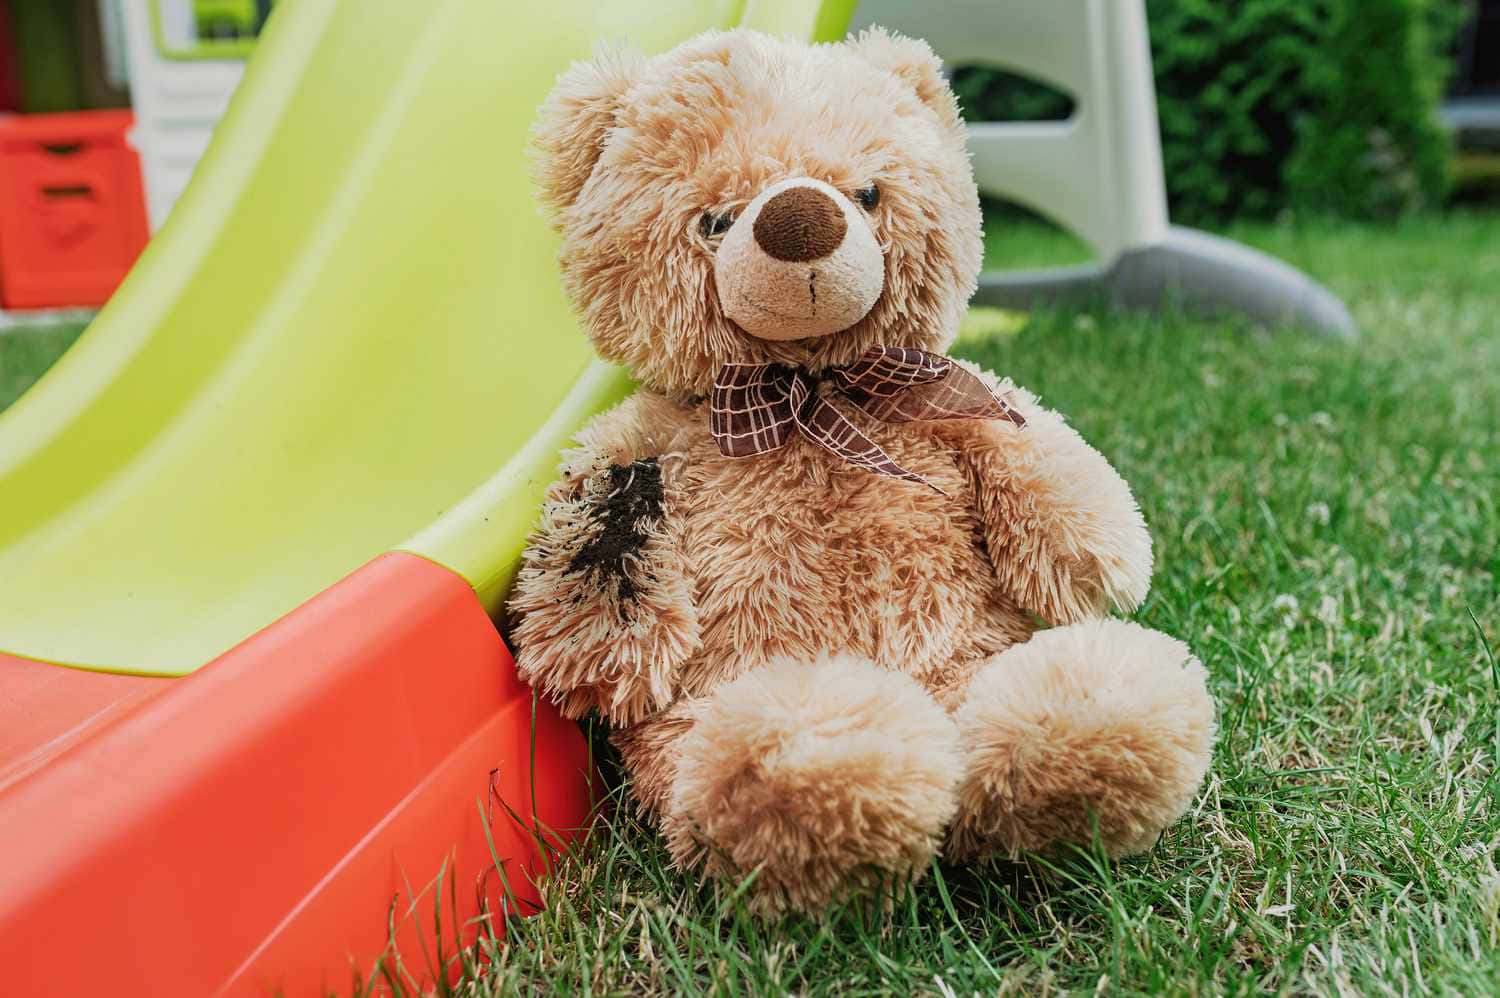 A Sweet Teddy Bear Ready to be Hugged